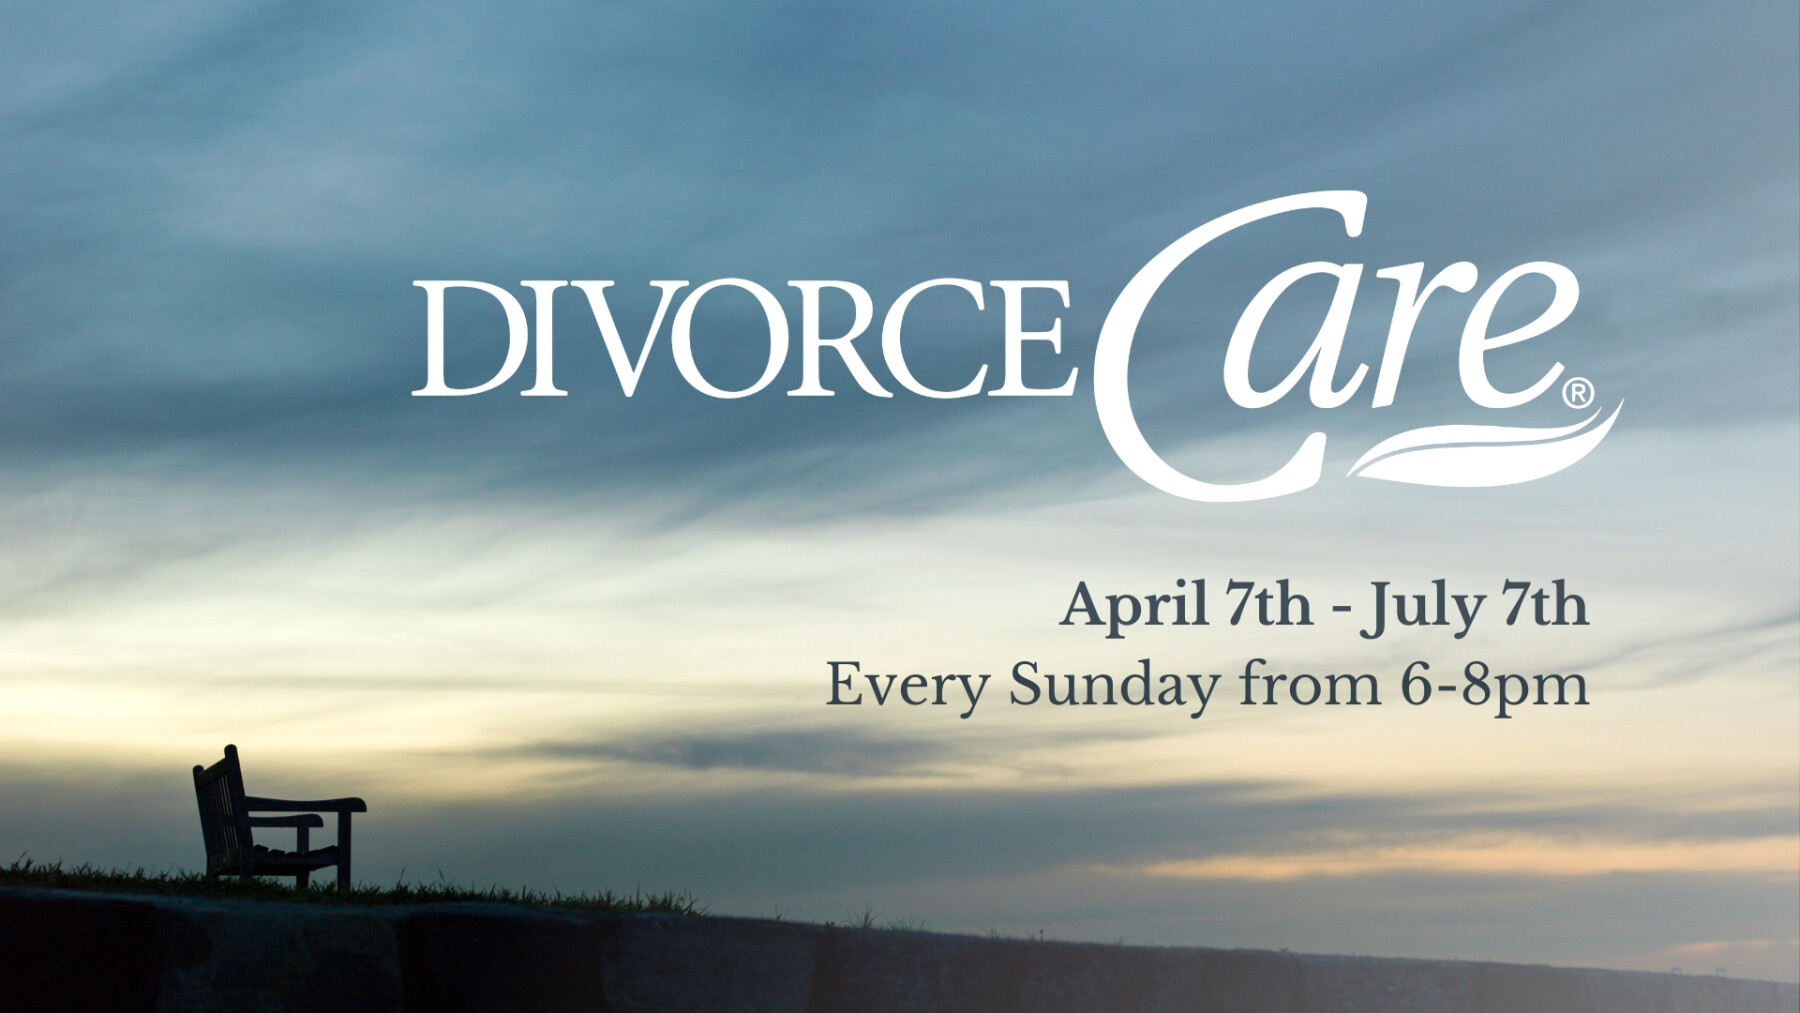 DivorceCare - April 7th-July 7th